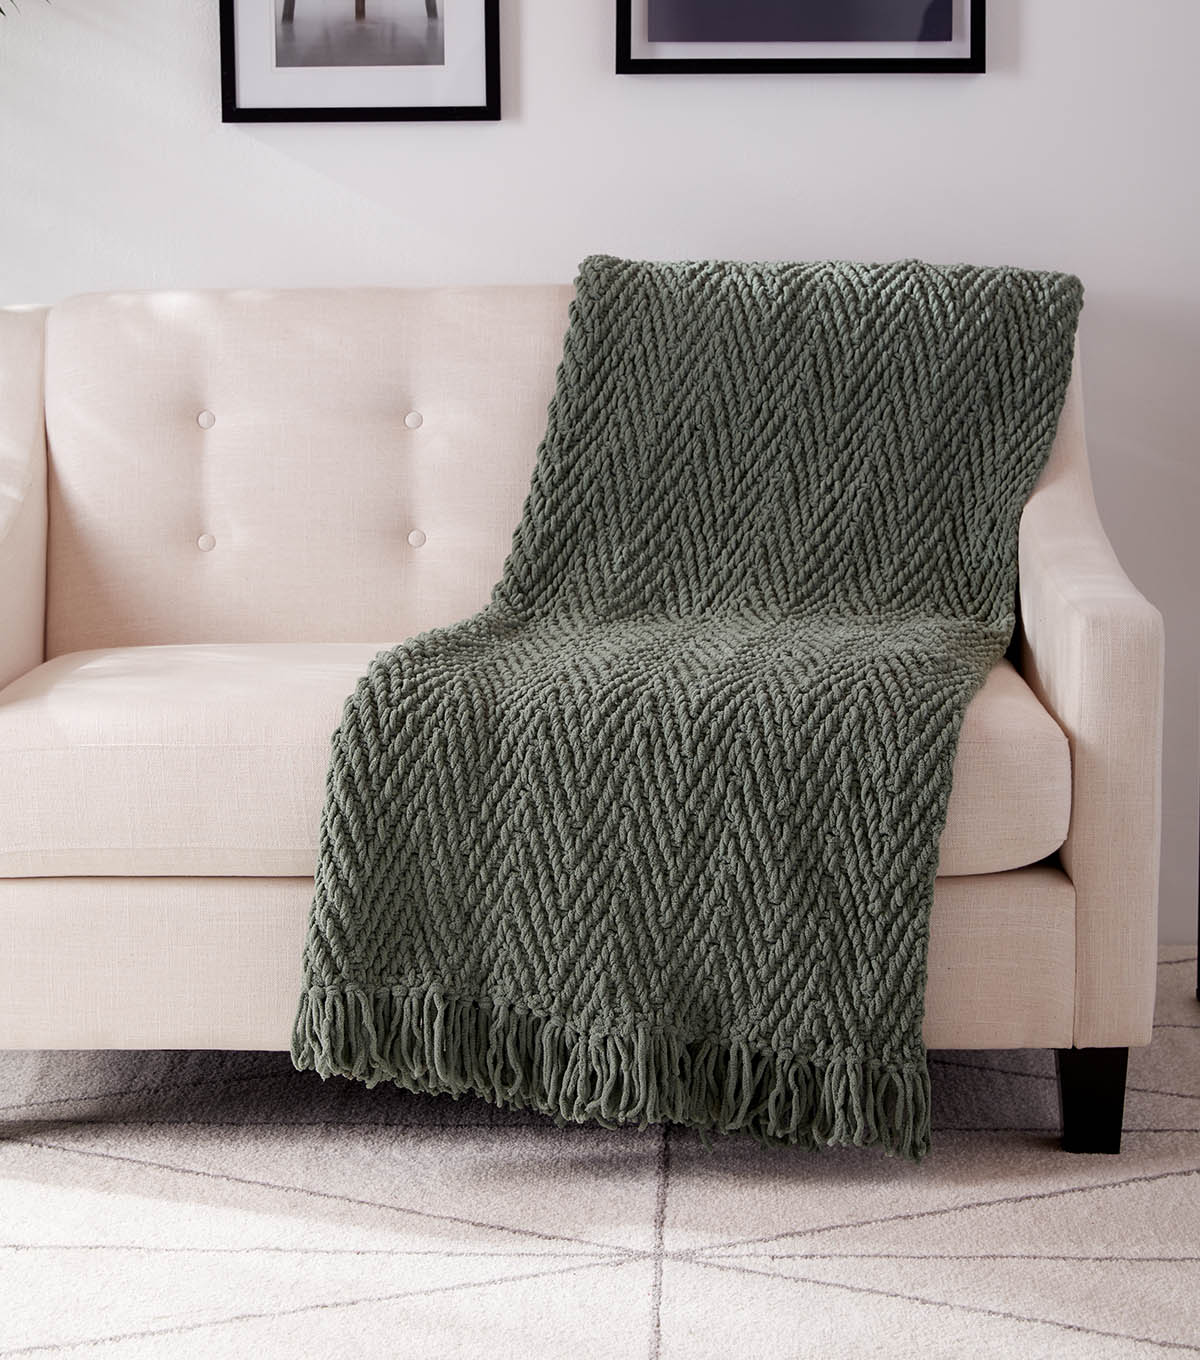 How To Make a Bernat Blanket Herringbone Weave Knit Blanket | JOANN